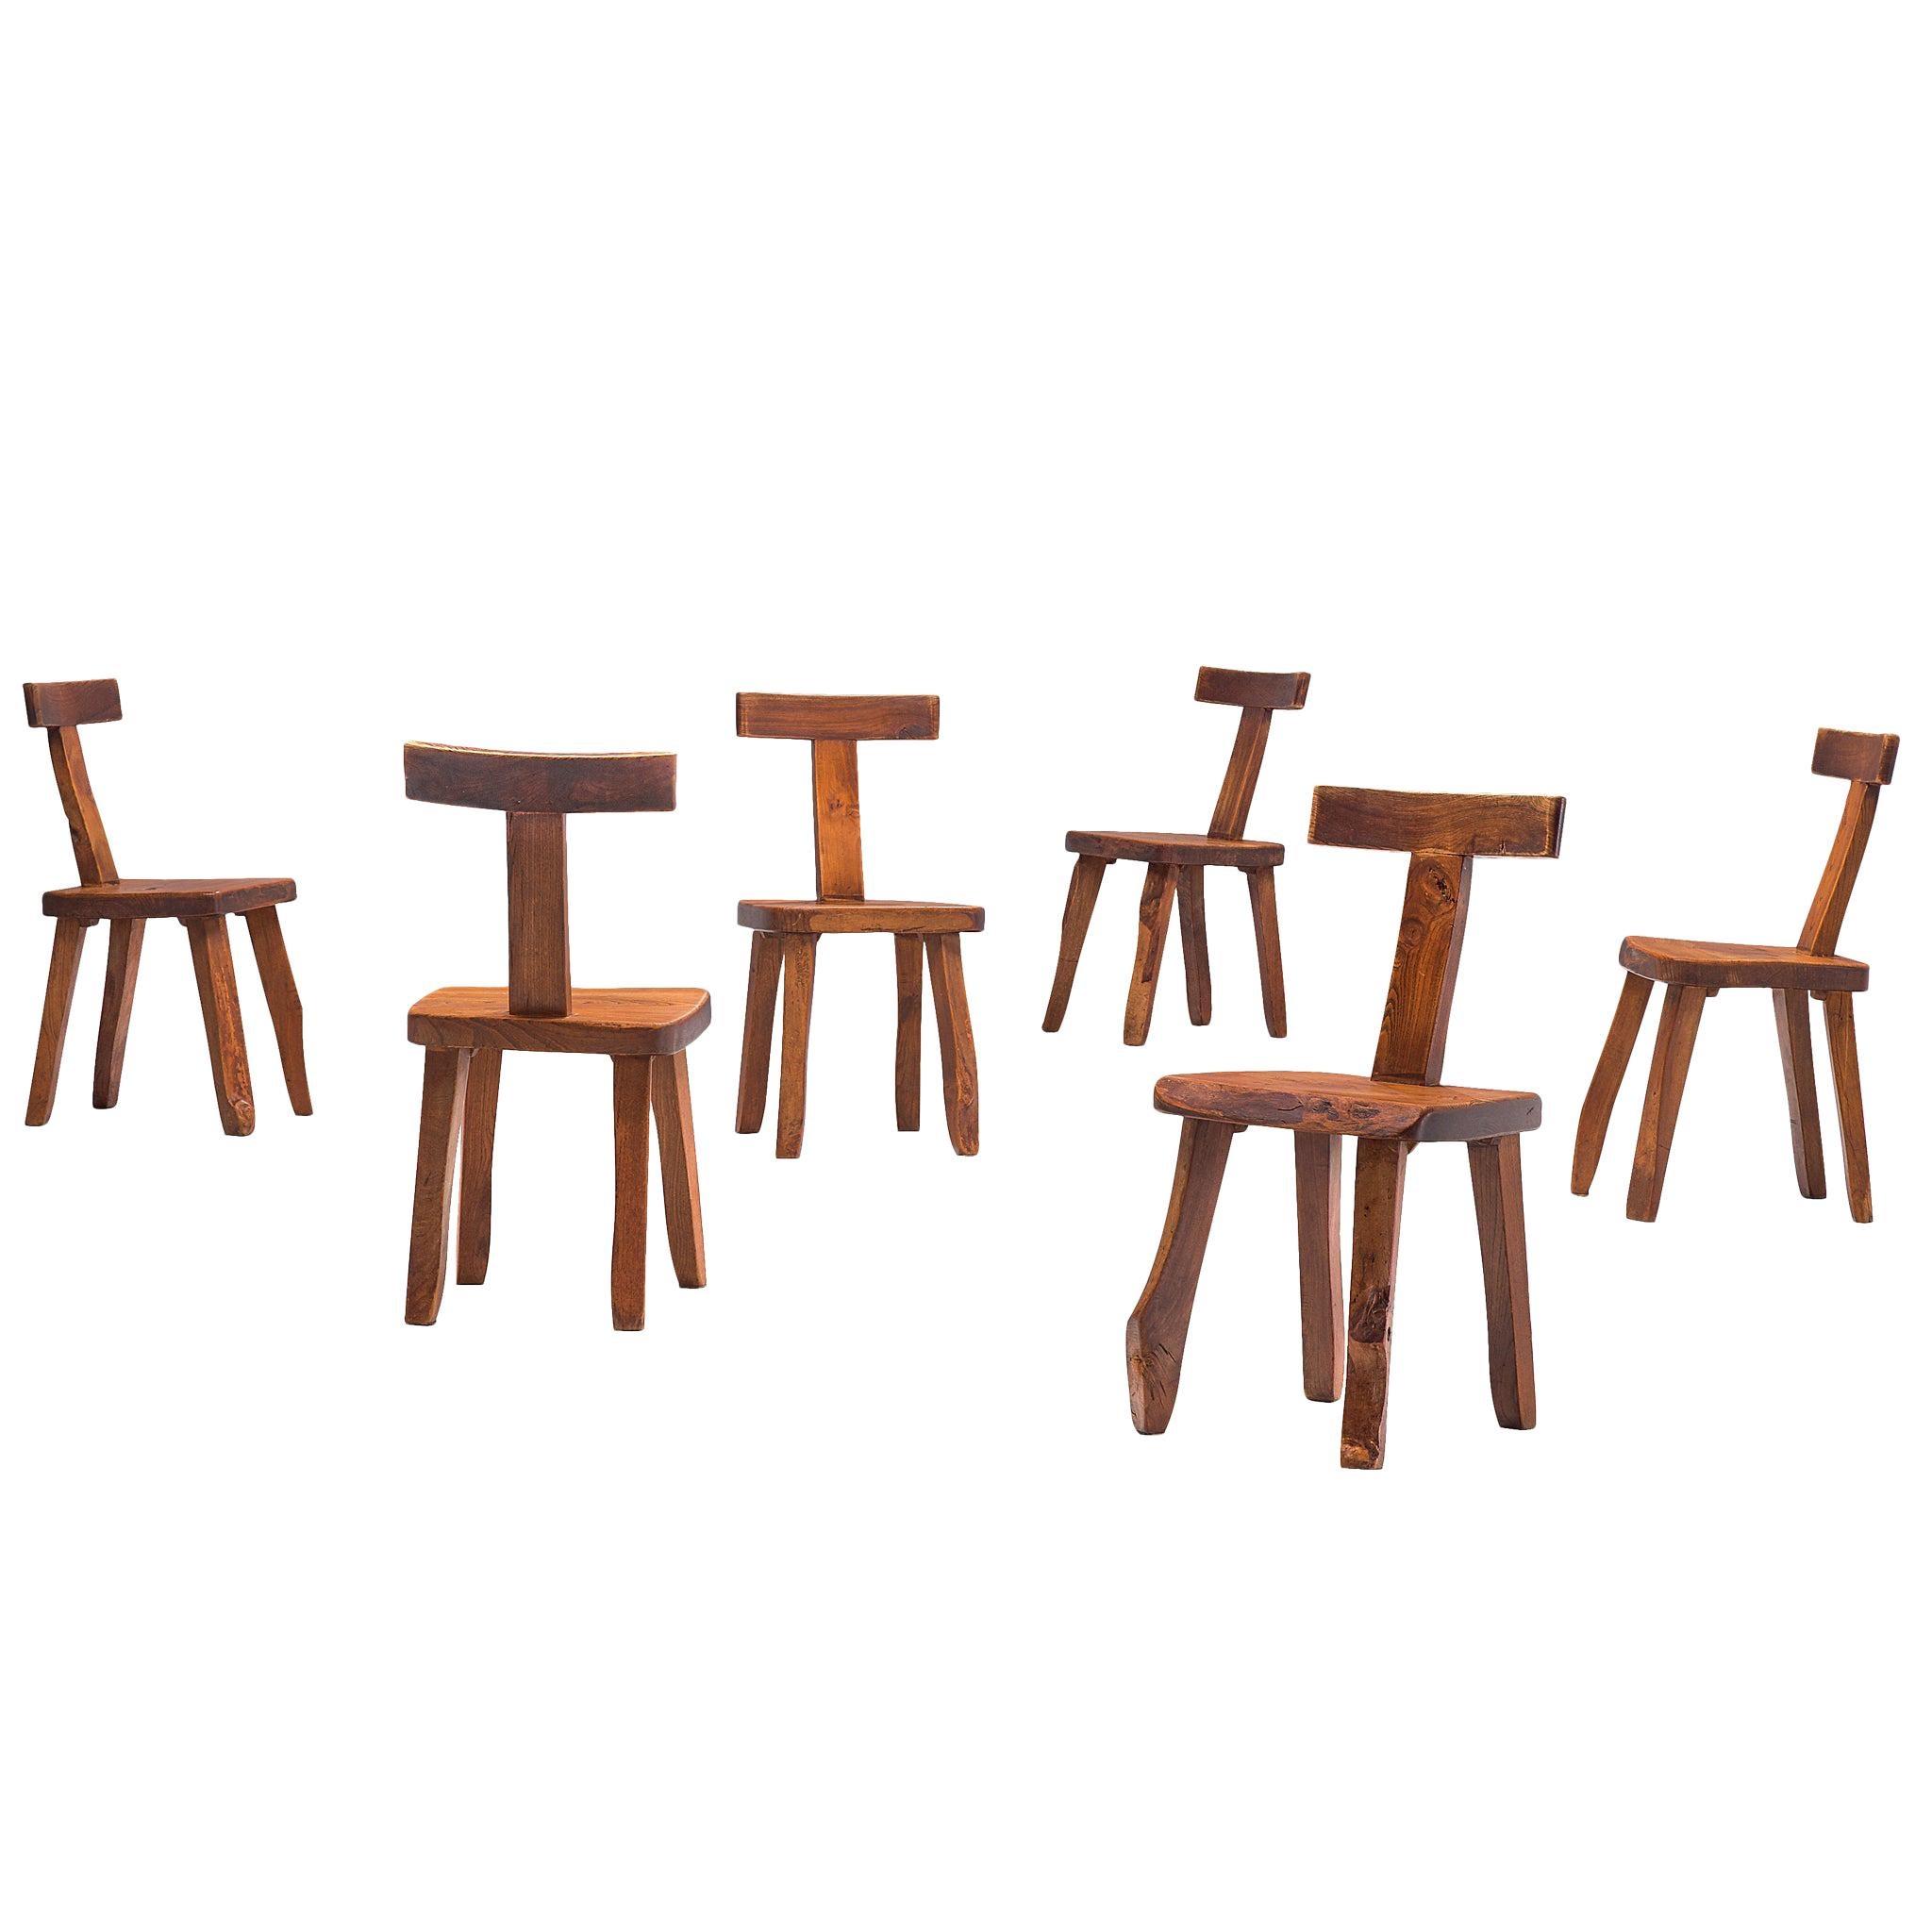 Set of Six Chairs by Olavi Hänninen